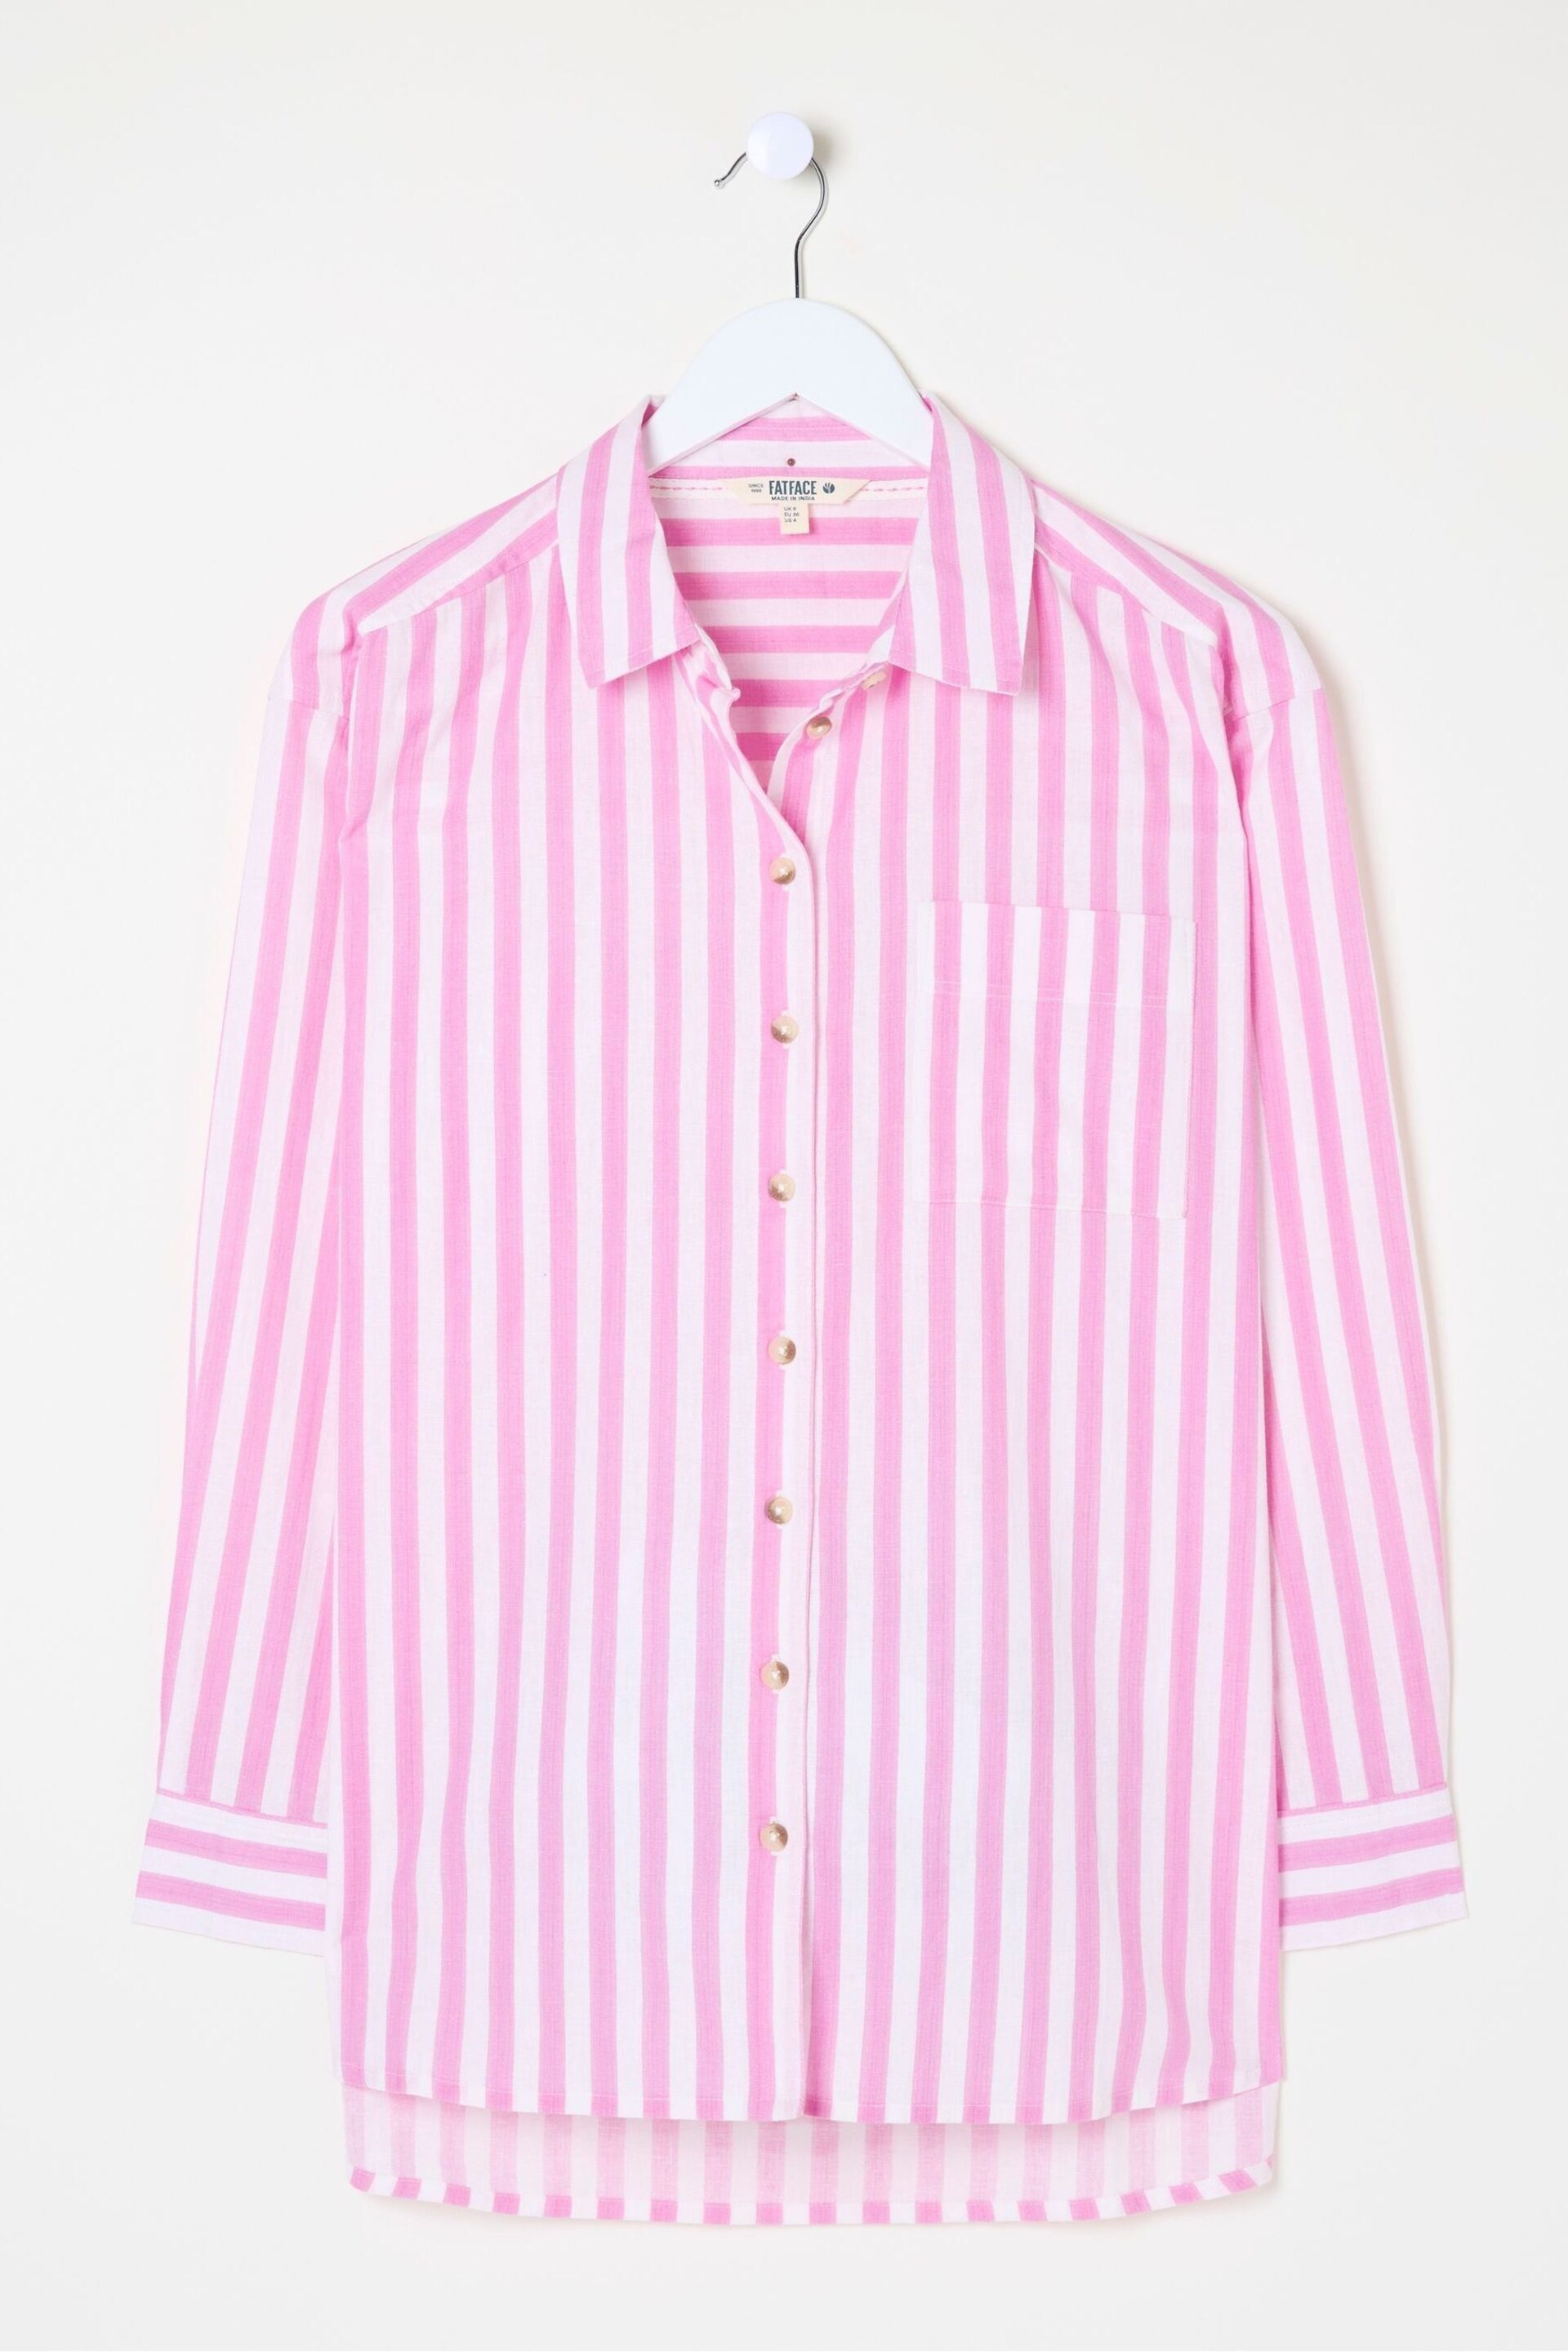 FatFace Pink Judes Stripe Shirt - Image 6 of 6